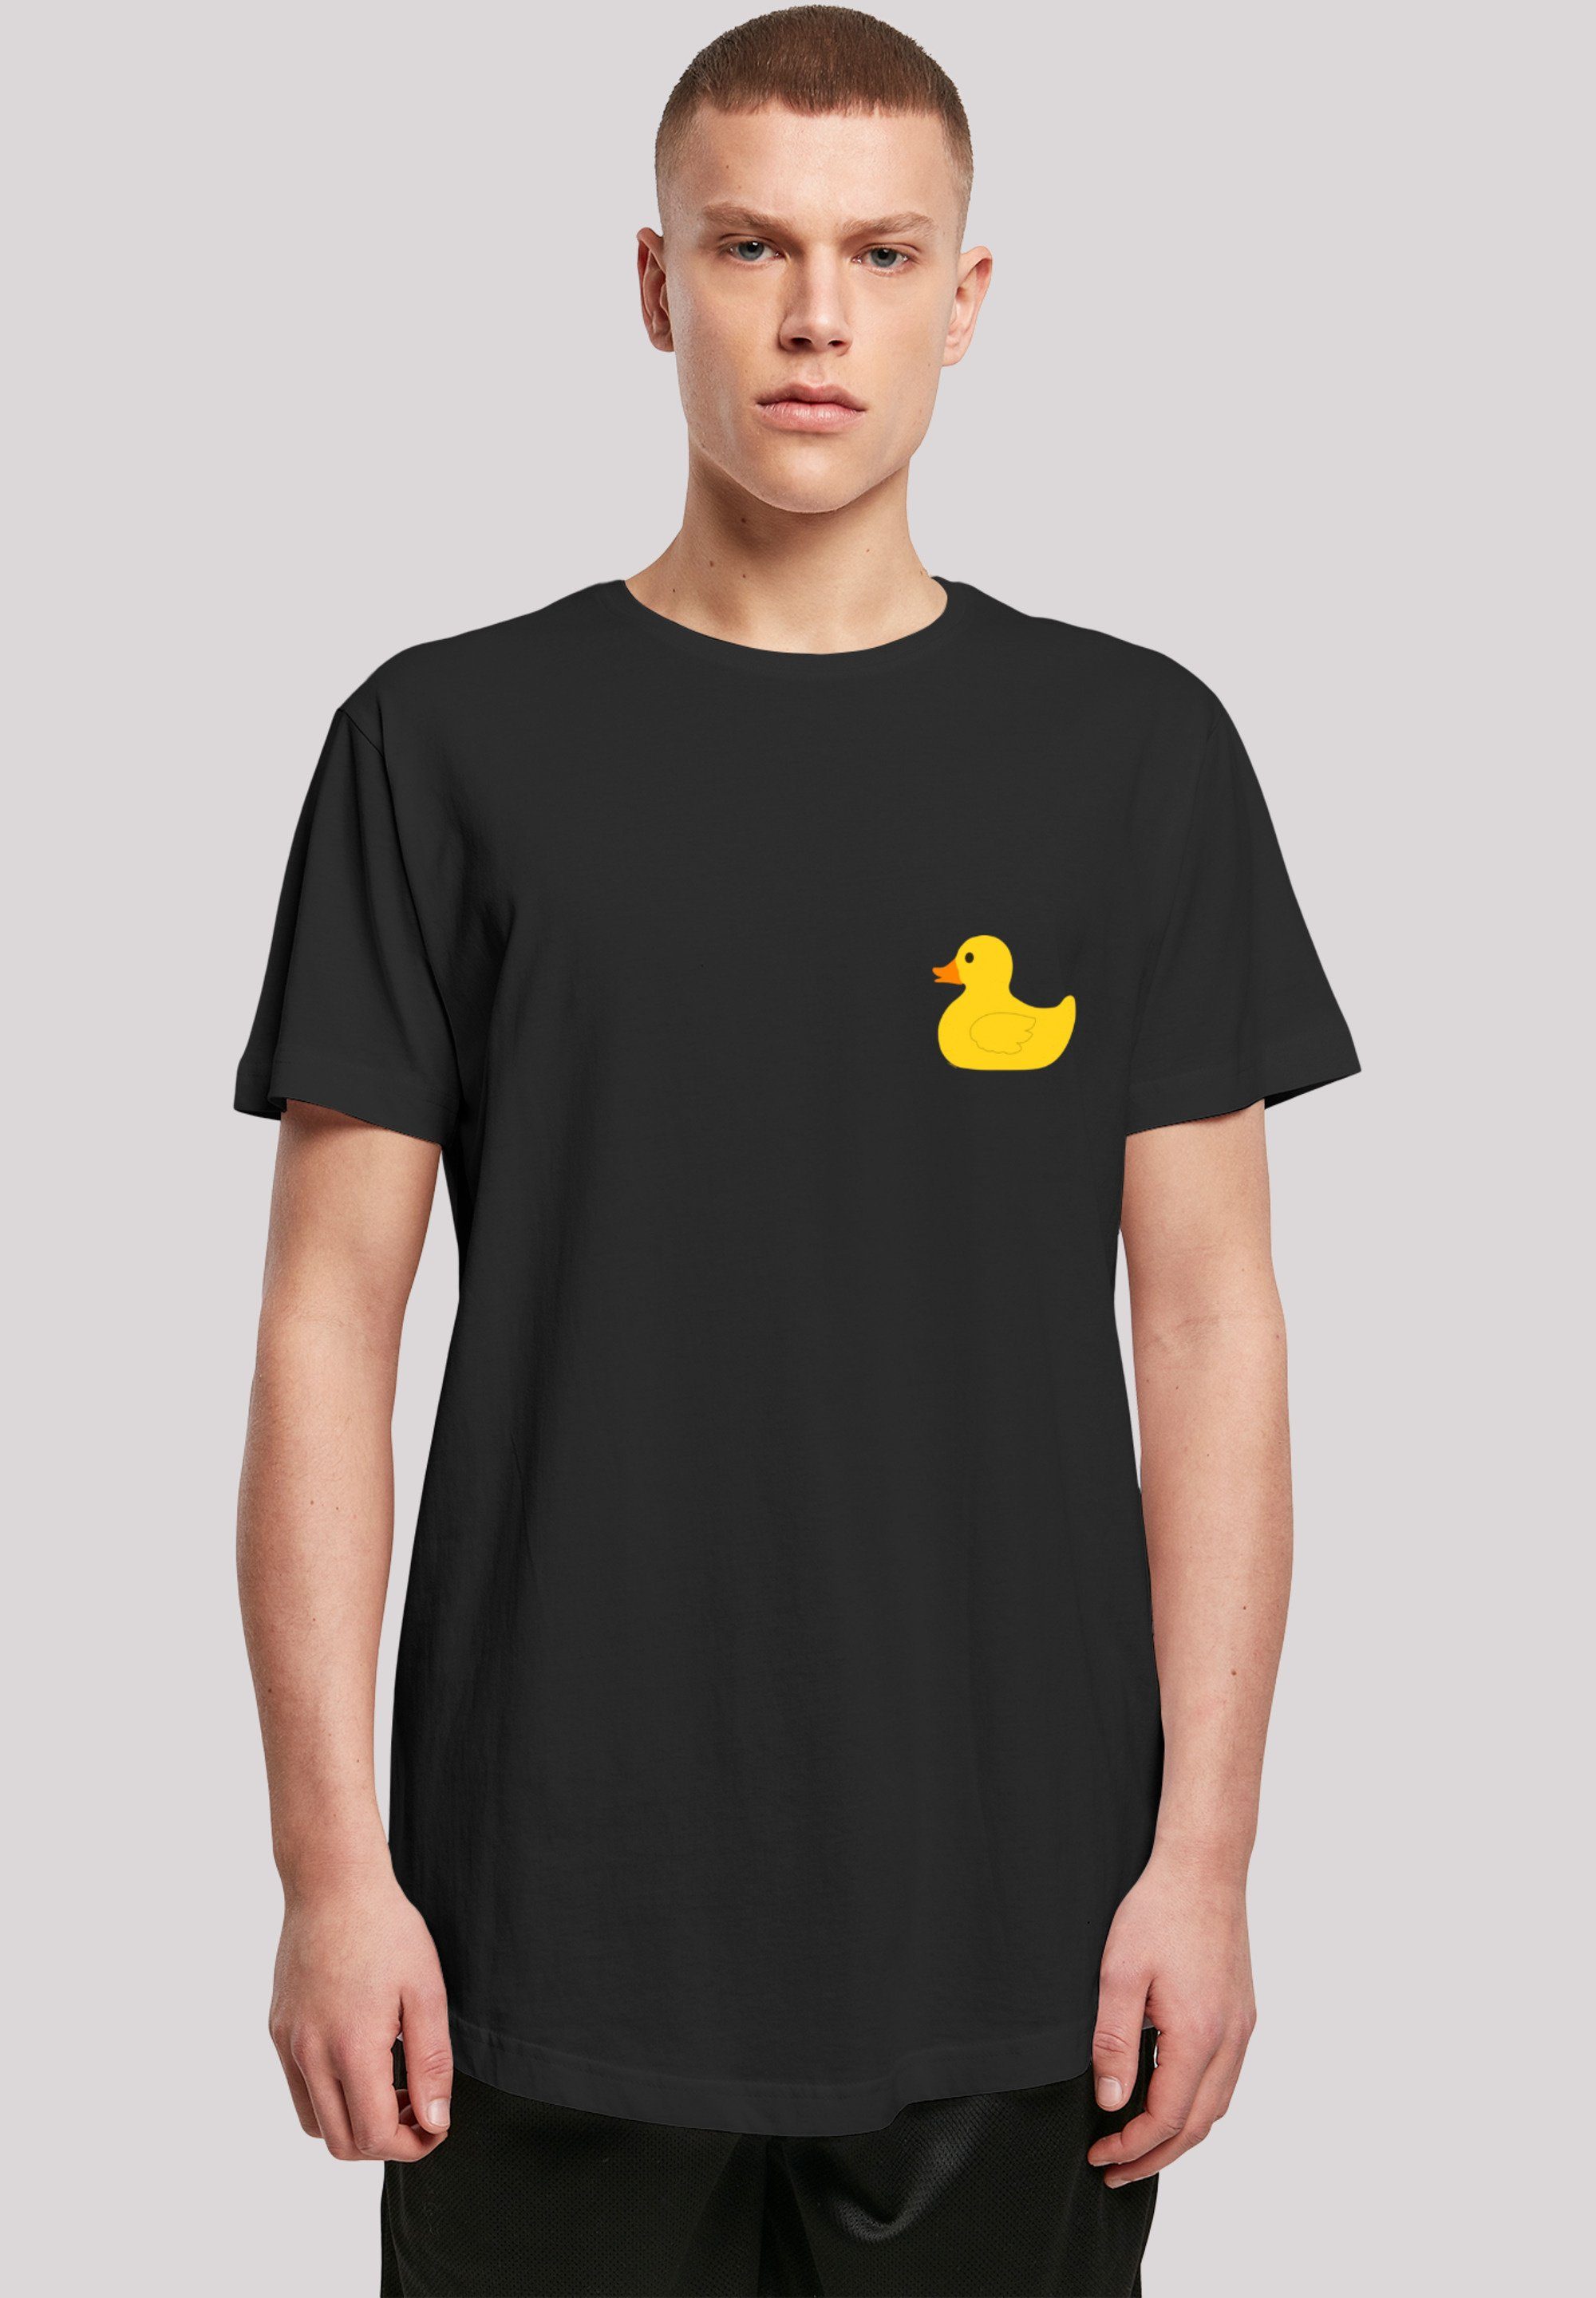 LONG cm groß und Rubber T-Shirt trägt 180 Yellow M Print, Duck F4NT4STIC ist Model Größe Das